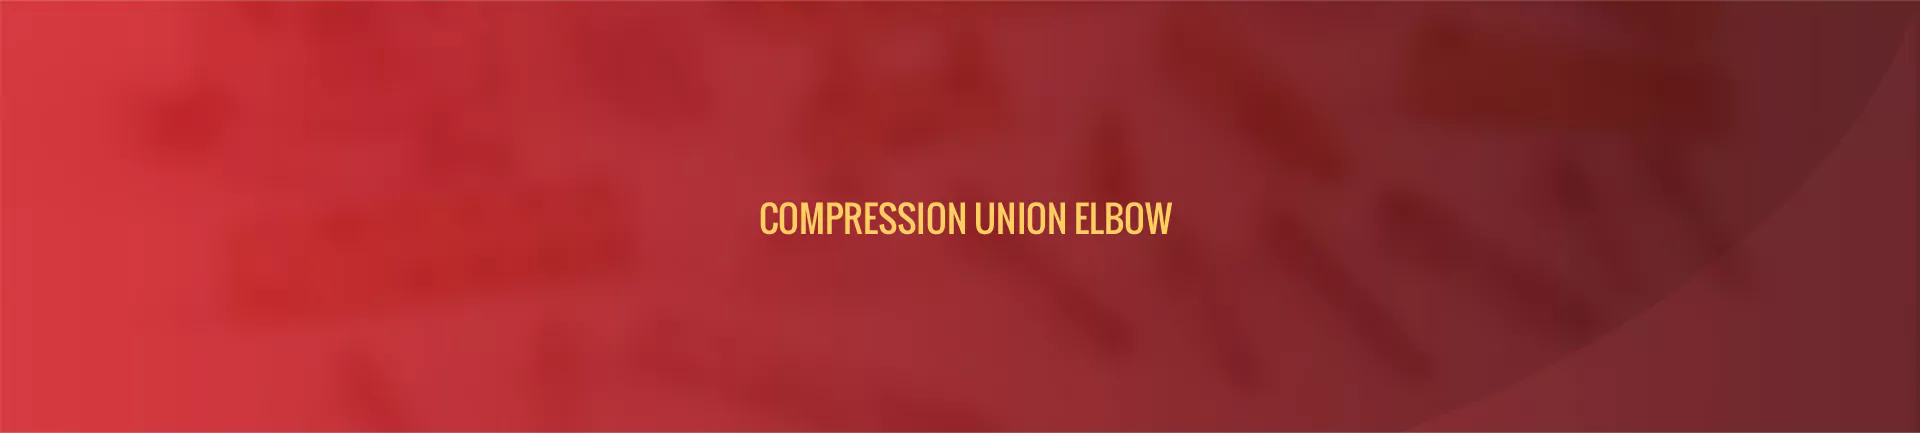 compression-union-elbow-banner